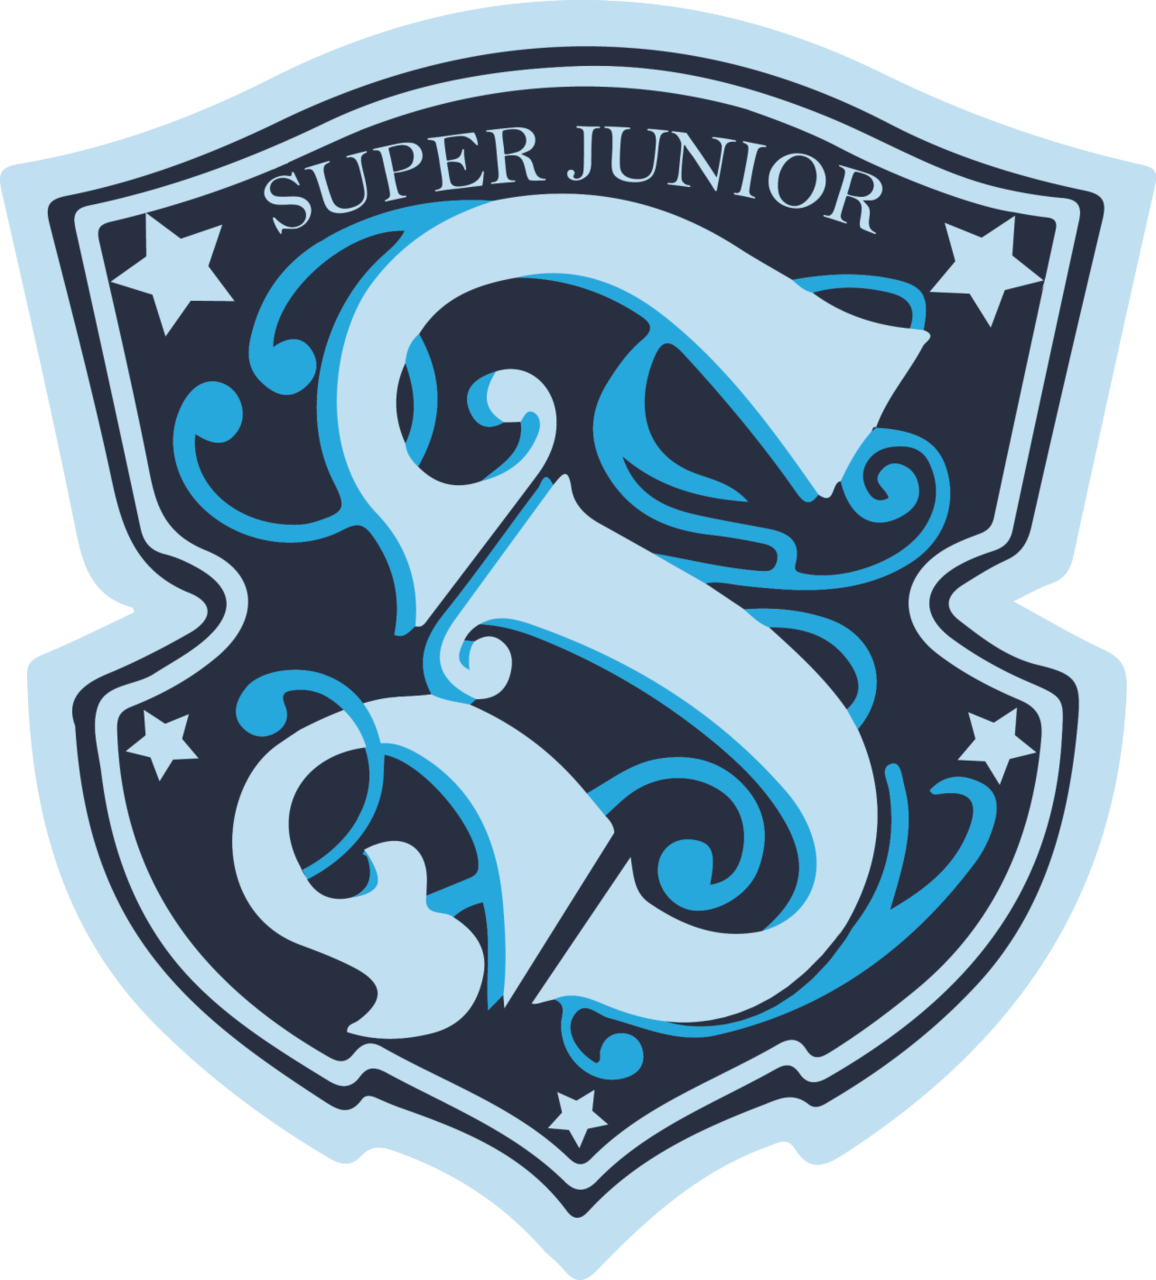 Super Junior Kpop Group Logo PNG